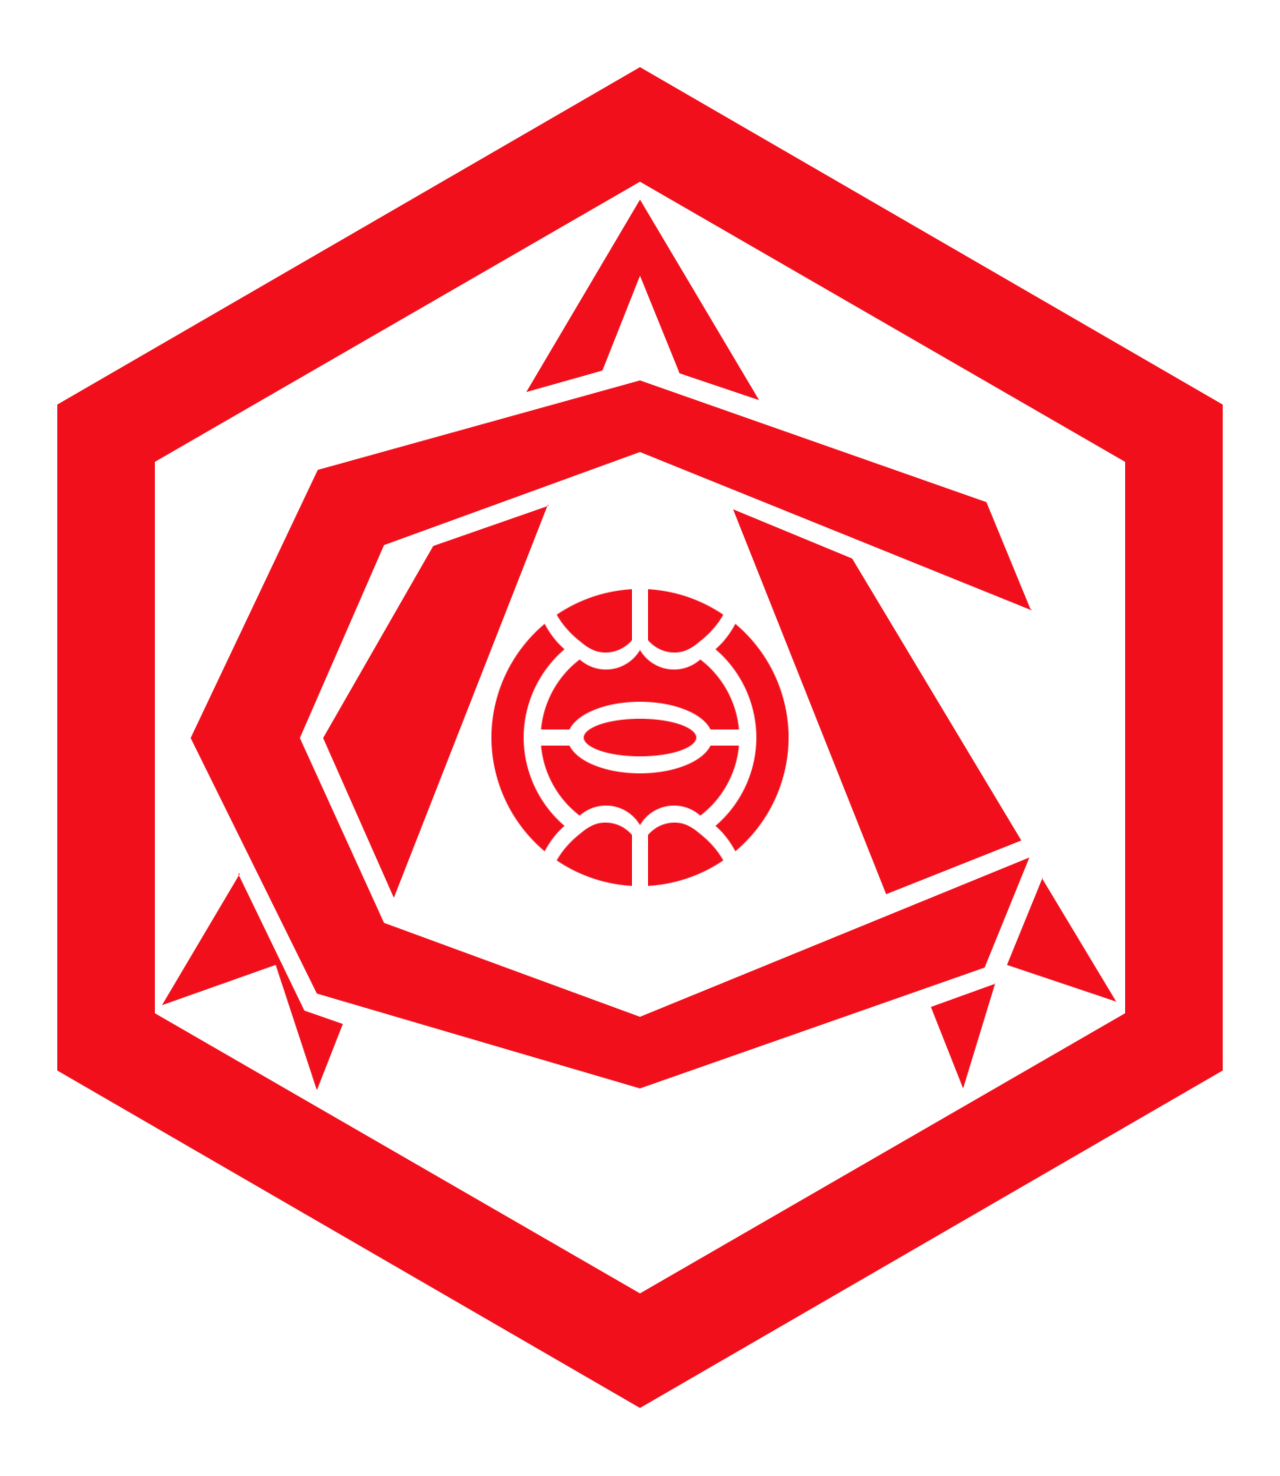 File:Former logo of Beşiktaş JK (1930s).png - Wikipedia